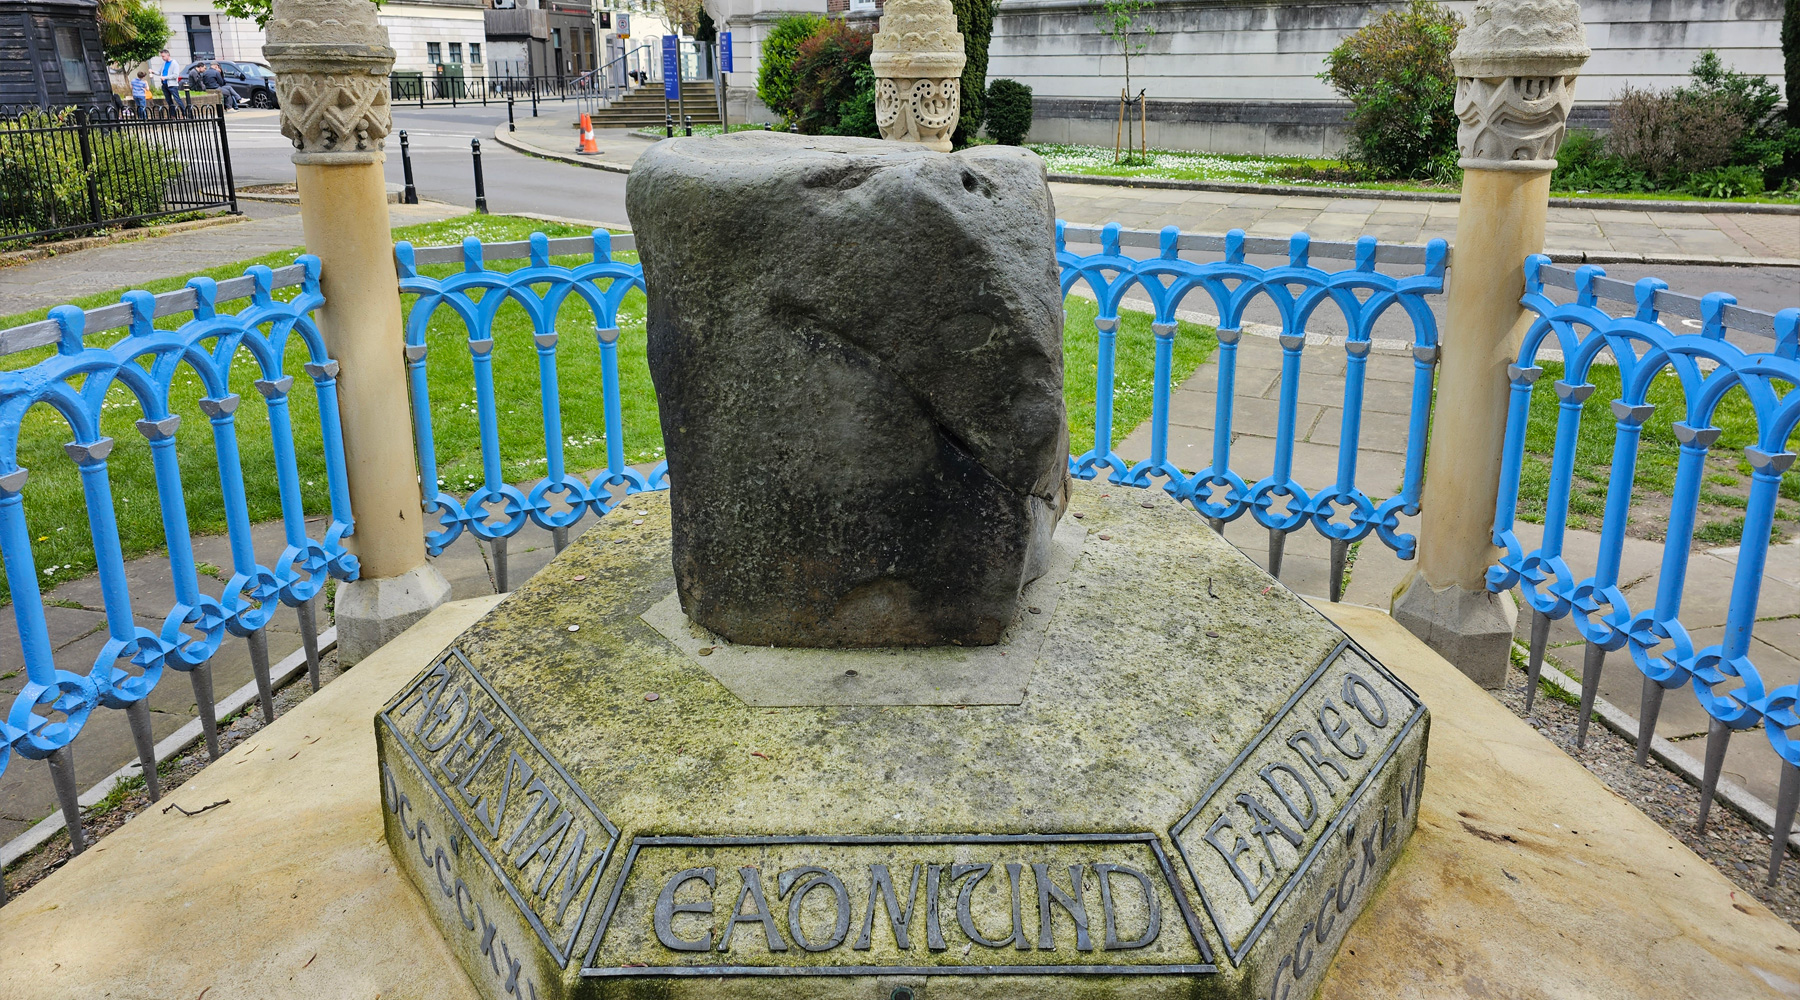 King Pronounciation Stone in Kingston, London Editorial Image